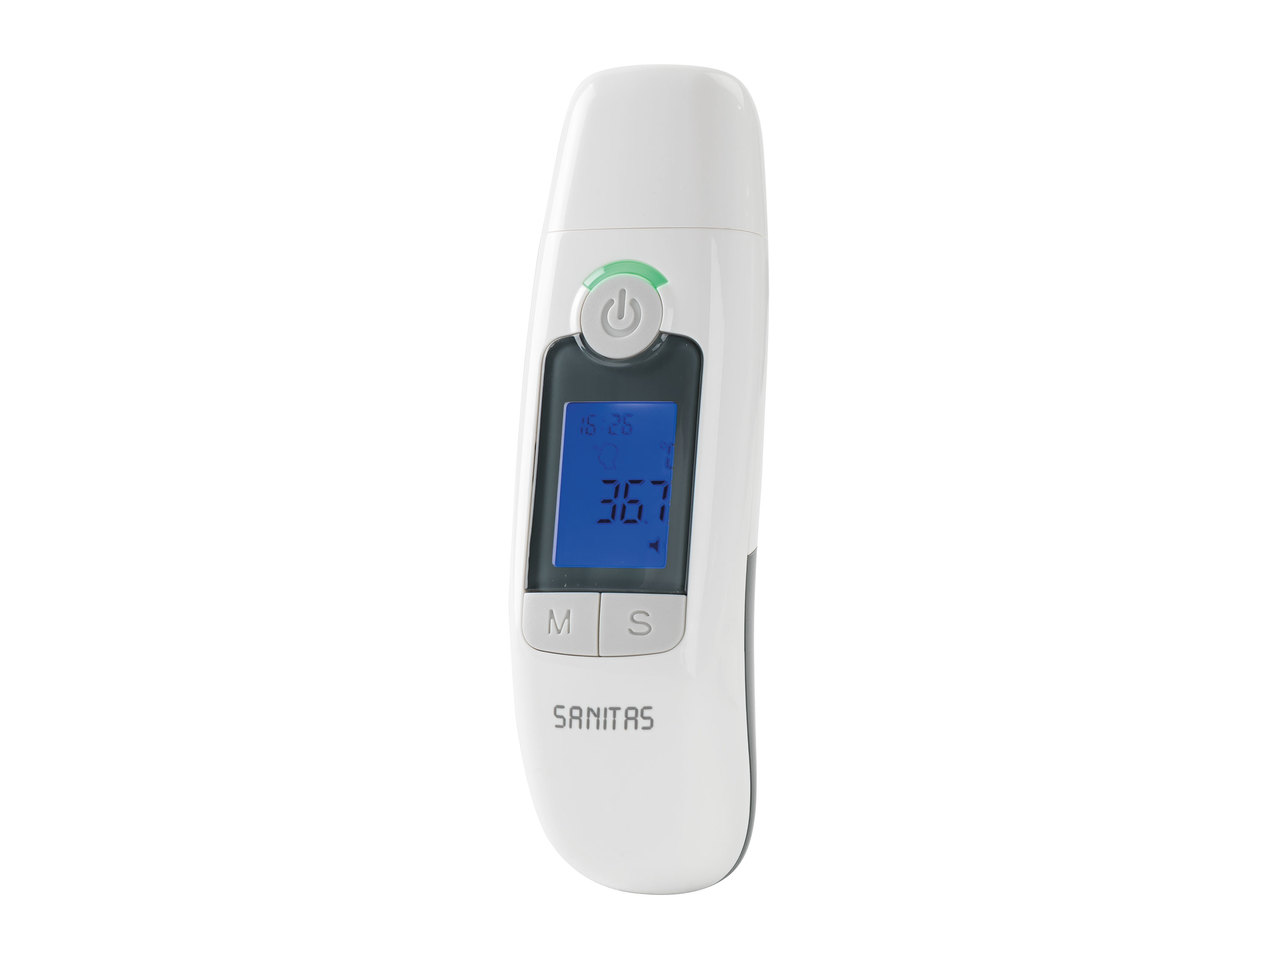 Sanitas Multi-Function Thermometer1